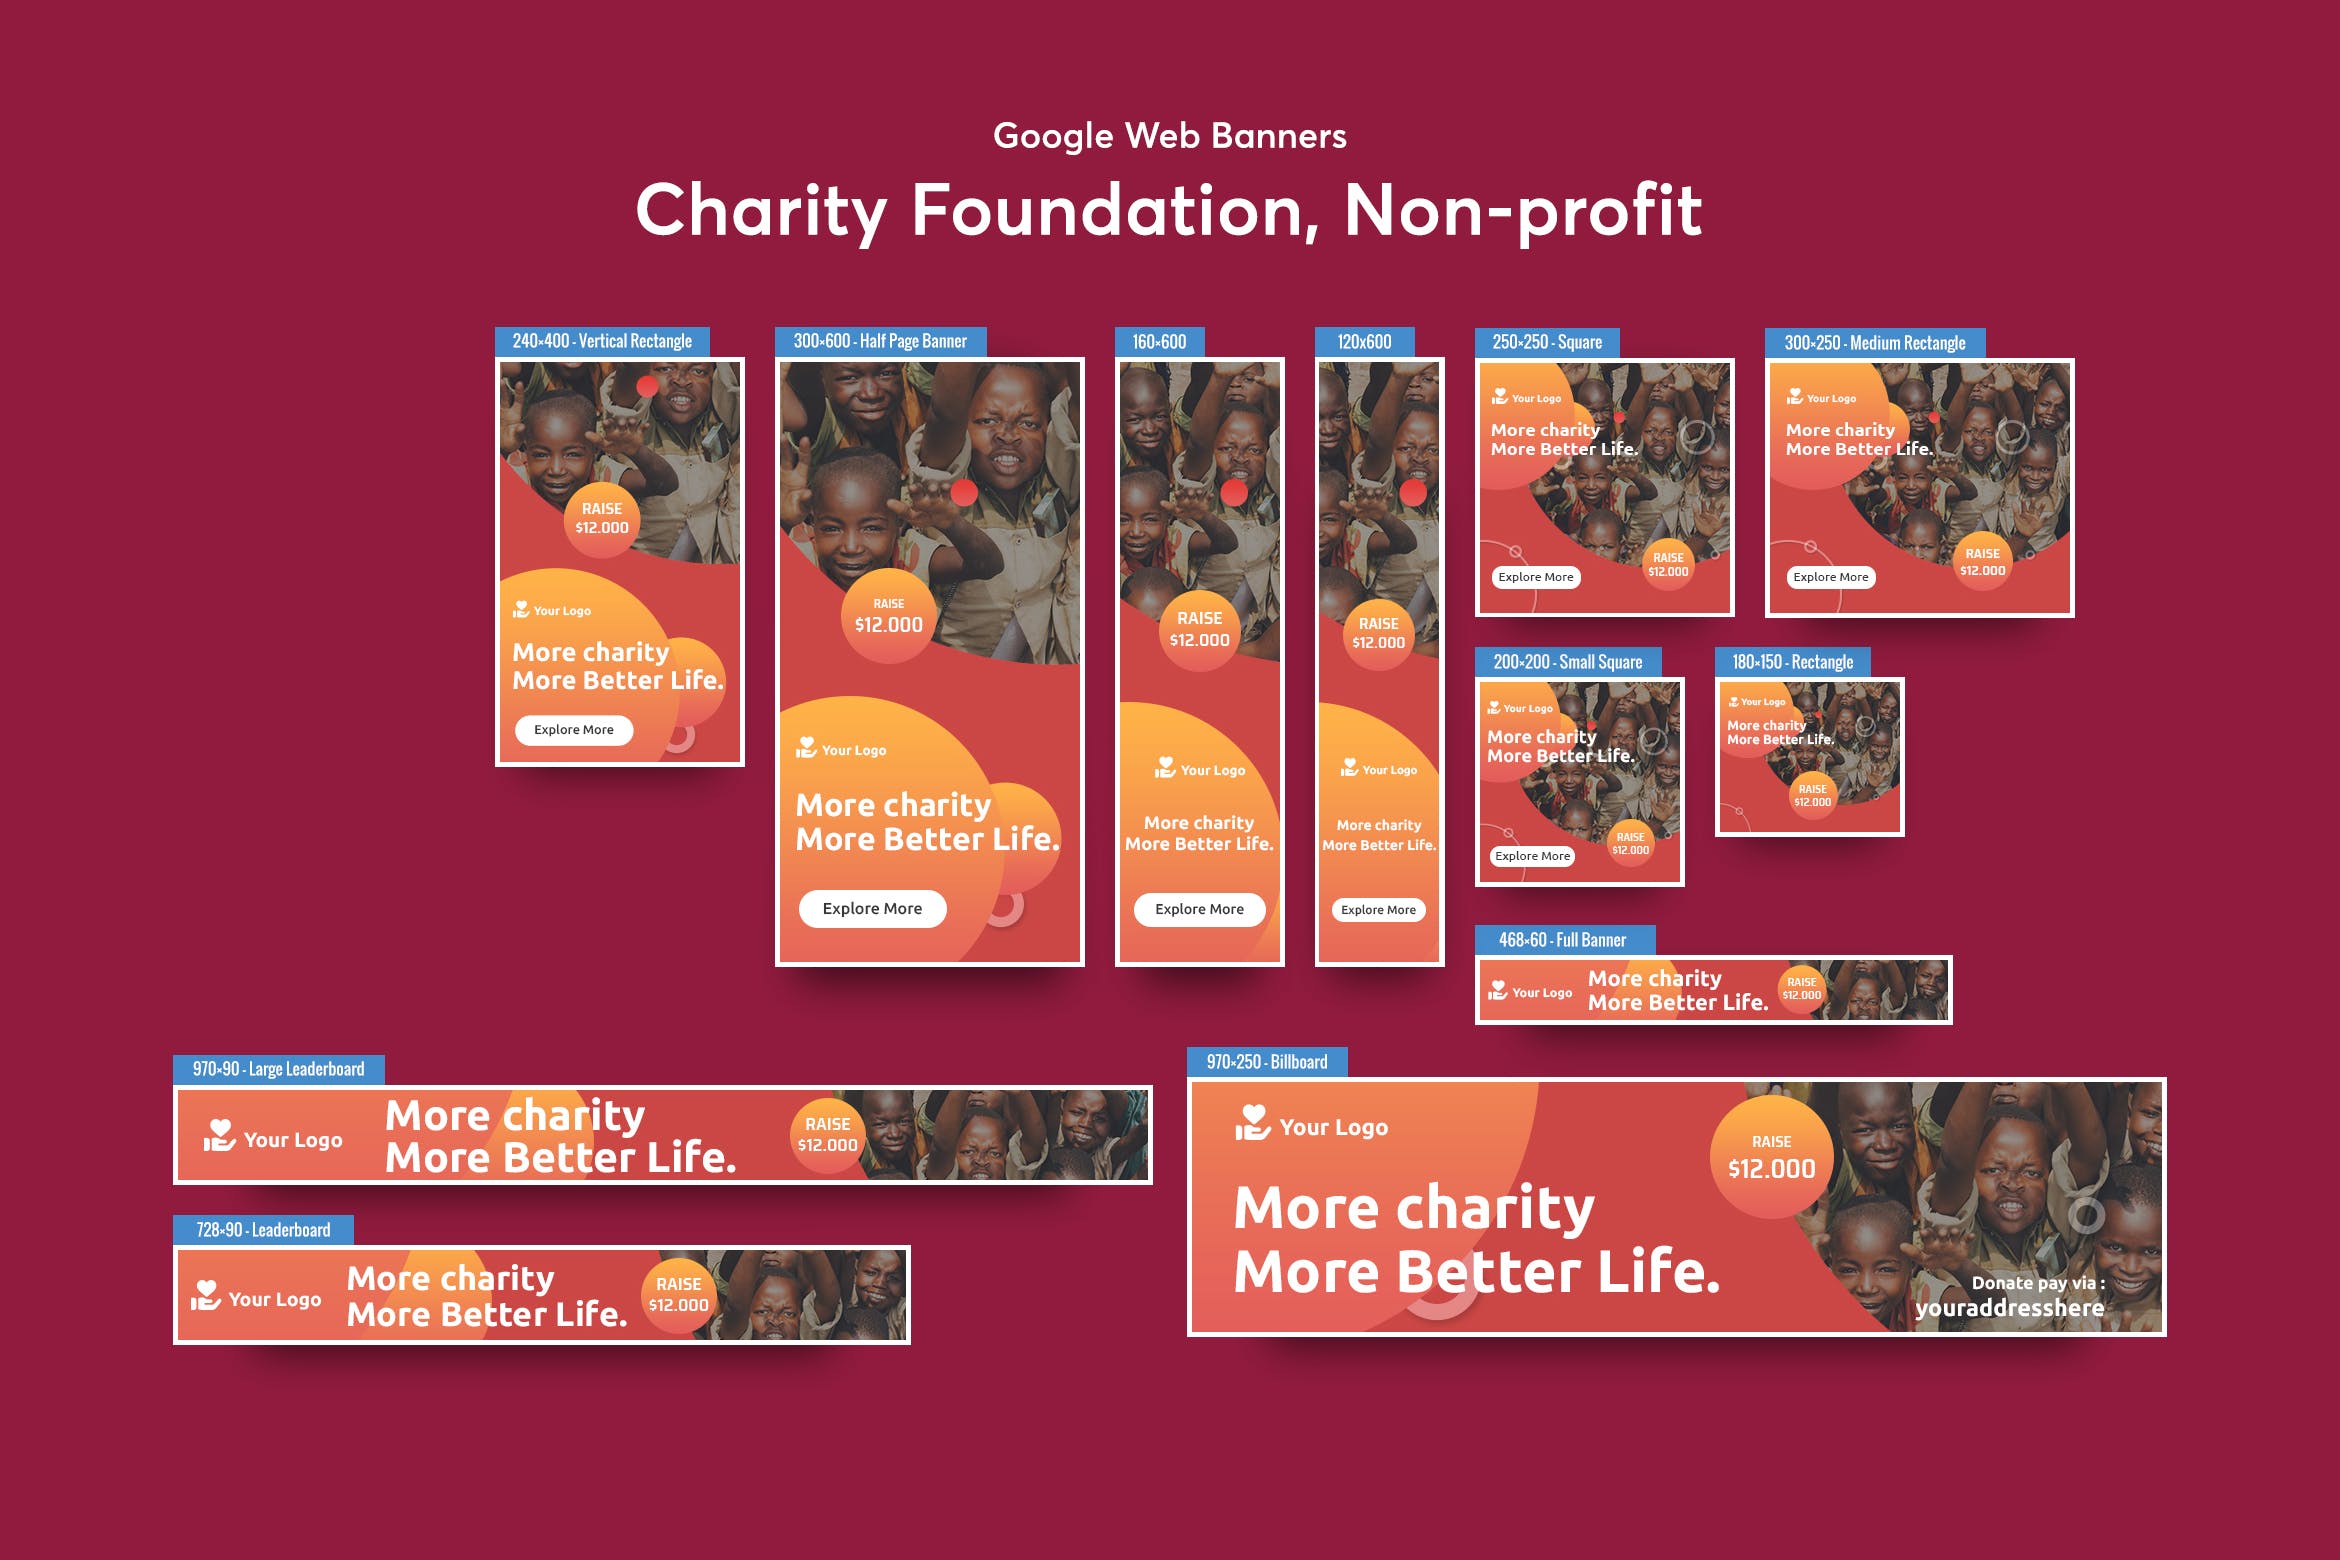 慈善基金会/非营利类型Banner横幅第一素材精选广告模板v2 Charity Foundation, Non-profit Banners Ad插图